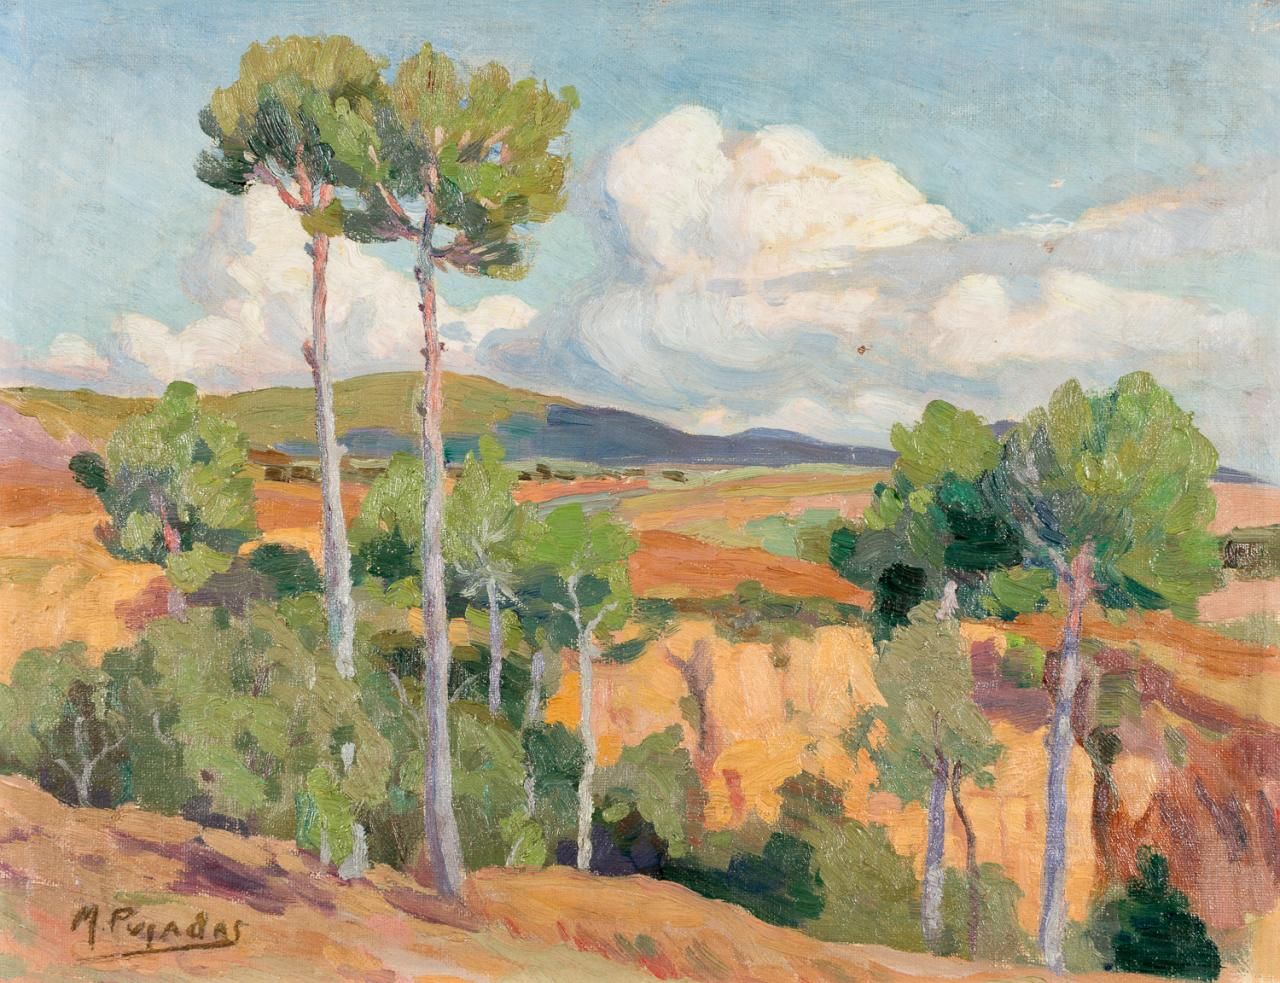 MIQUEL PUJADAS i BADIA (Terrassa, 1892-1974) Paesaggio
Olio su tela incollata su&hellip;